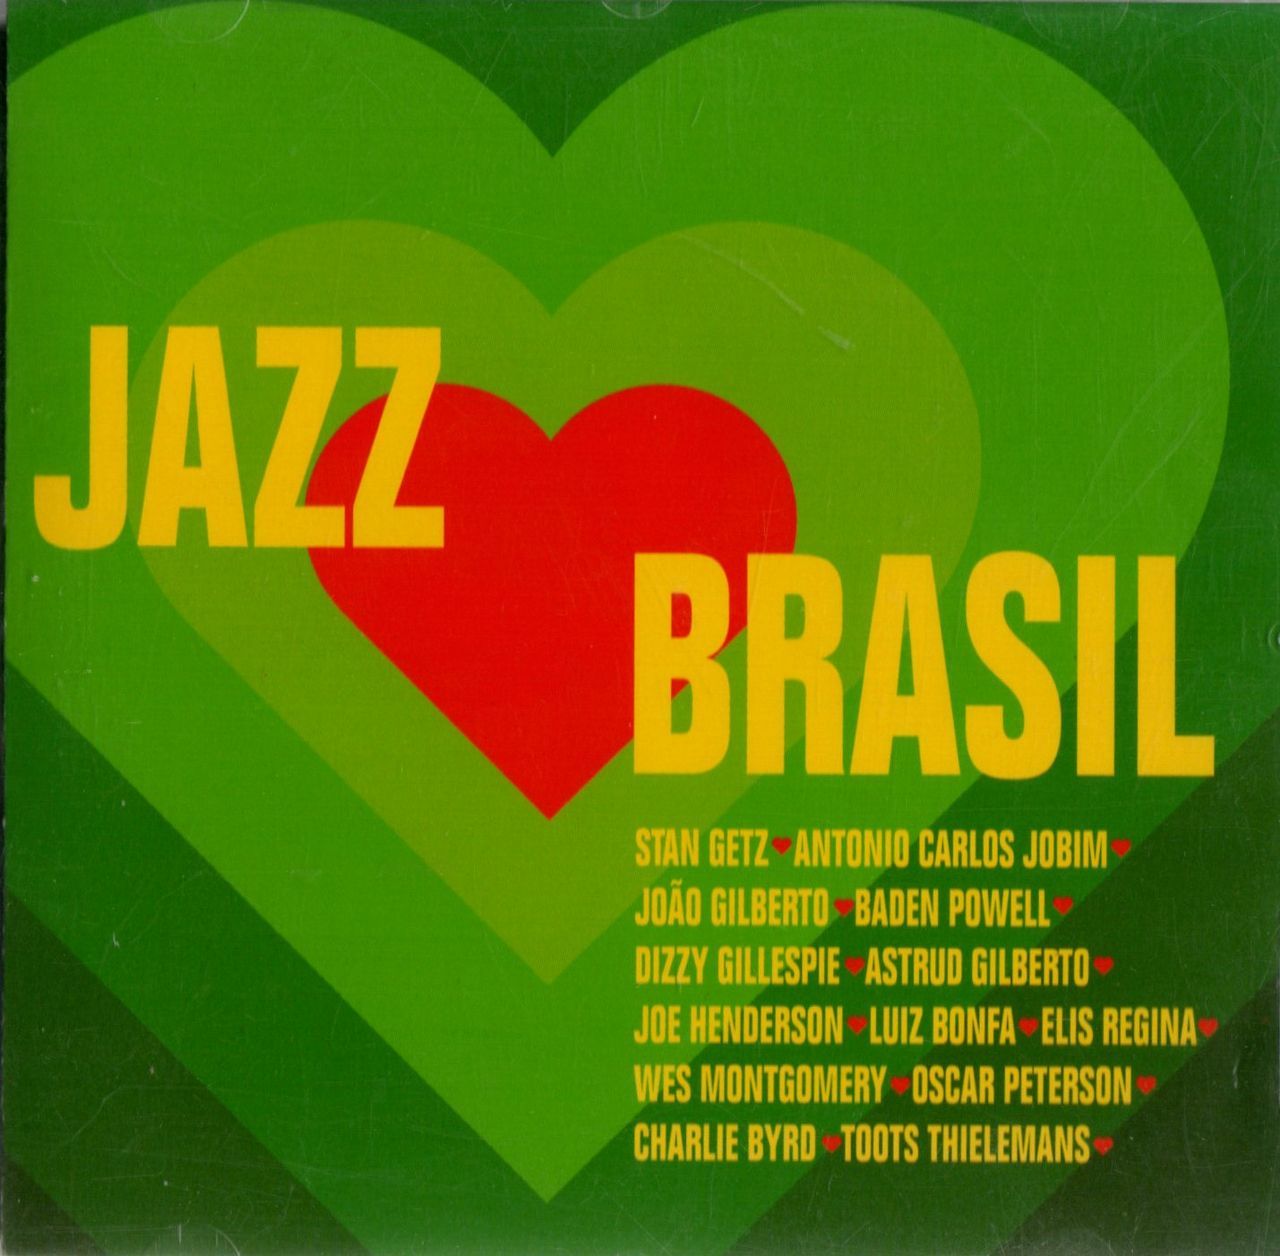 Jazz Brasil 1 track art